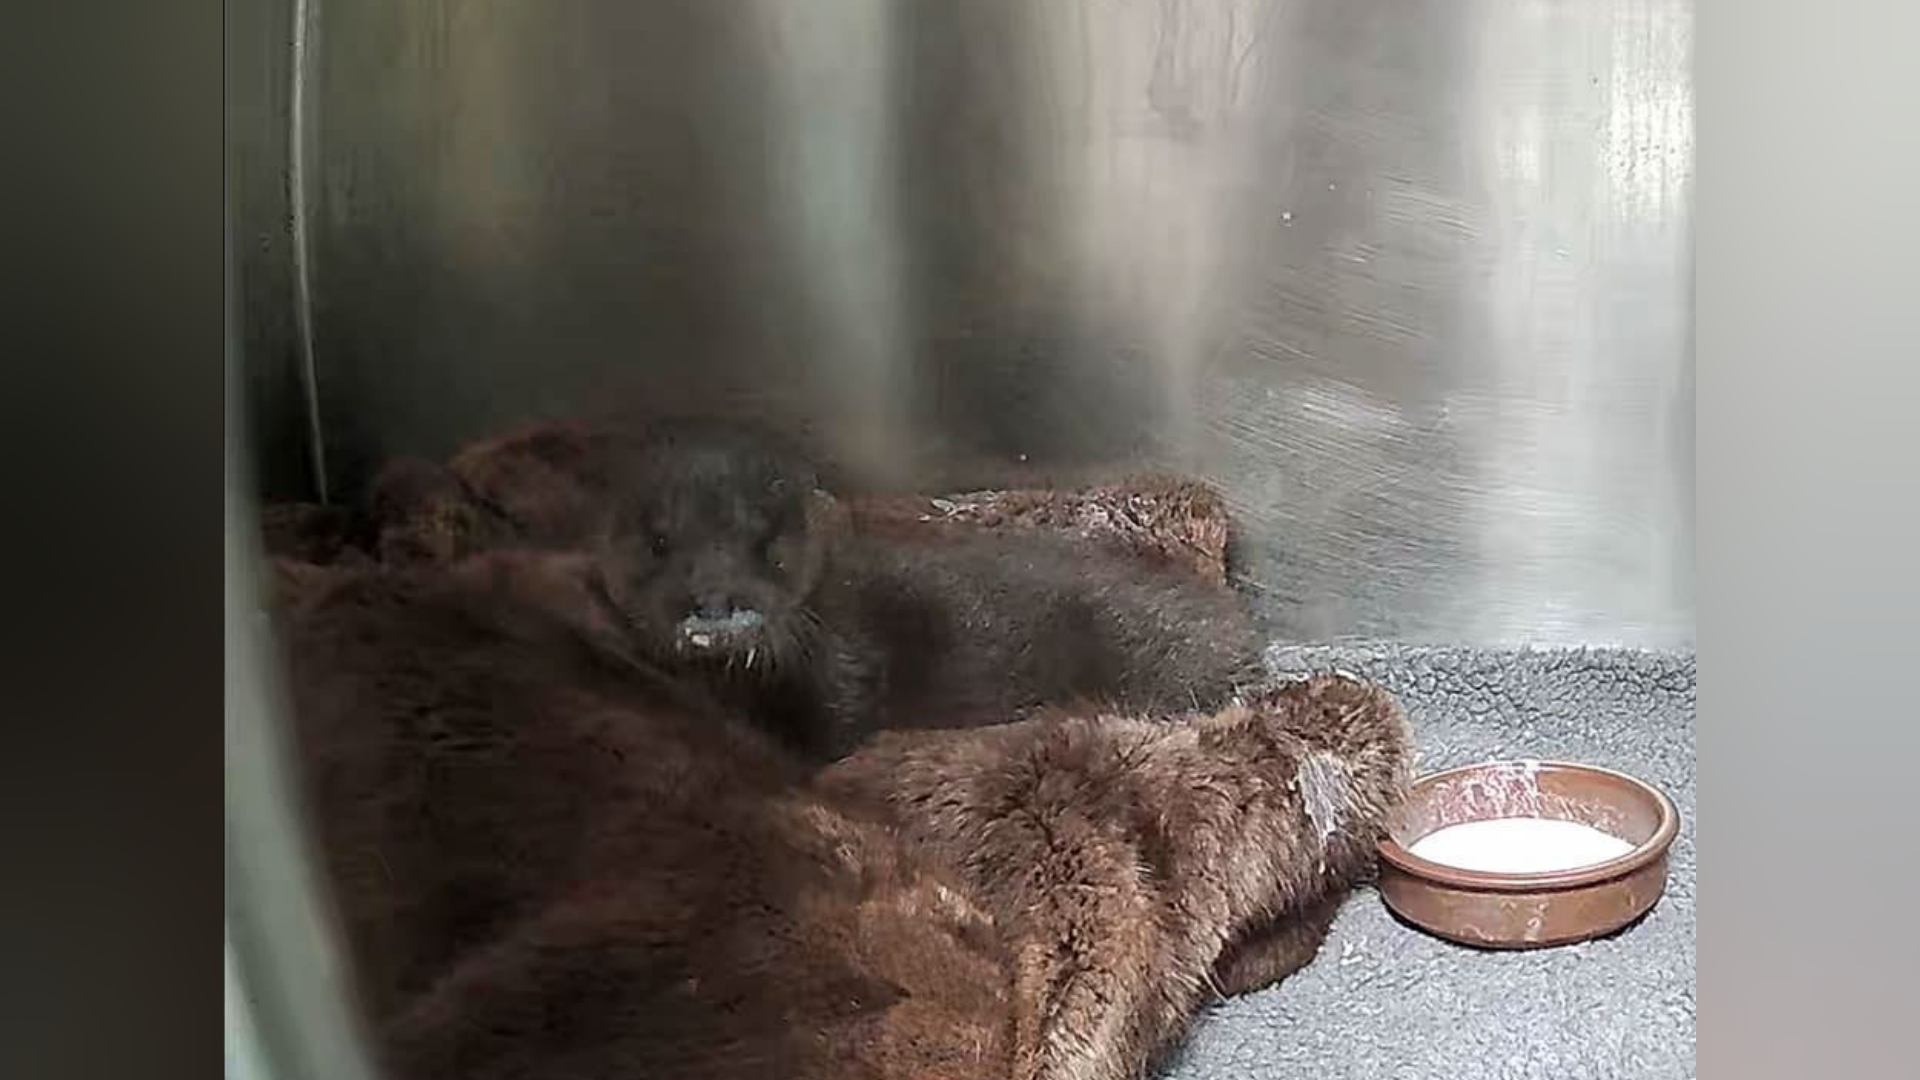 Five-week-old otter Baby Belle